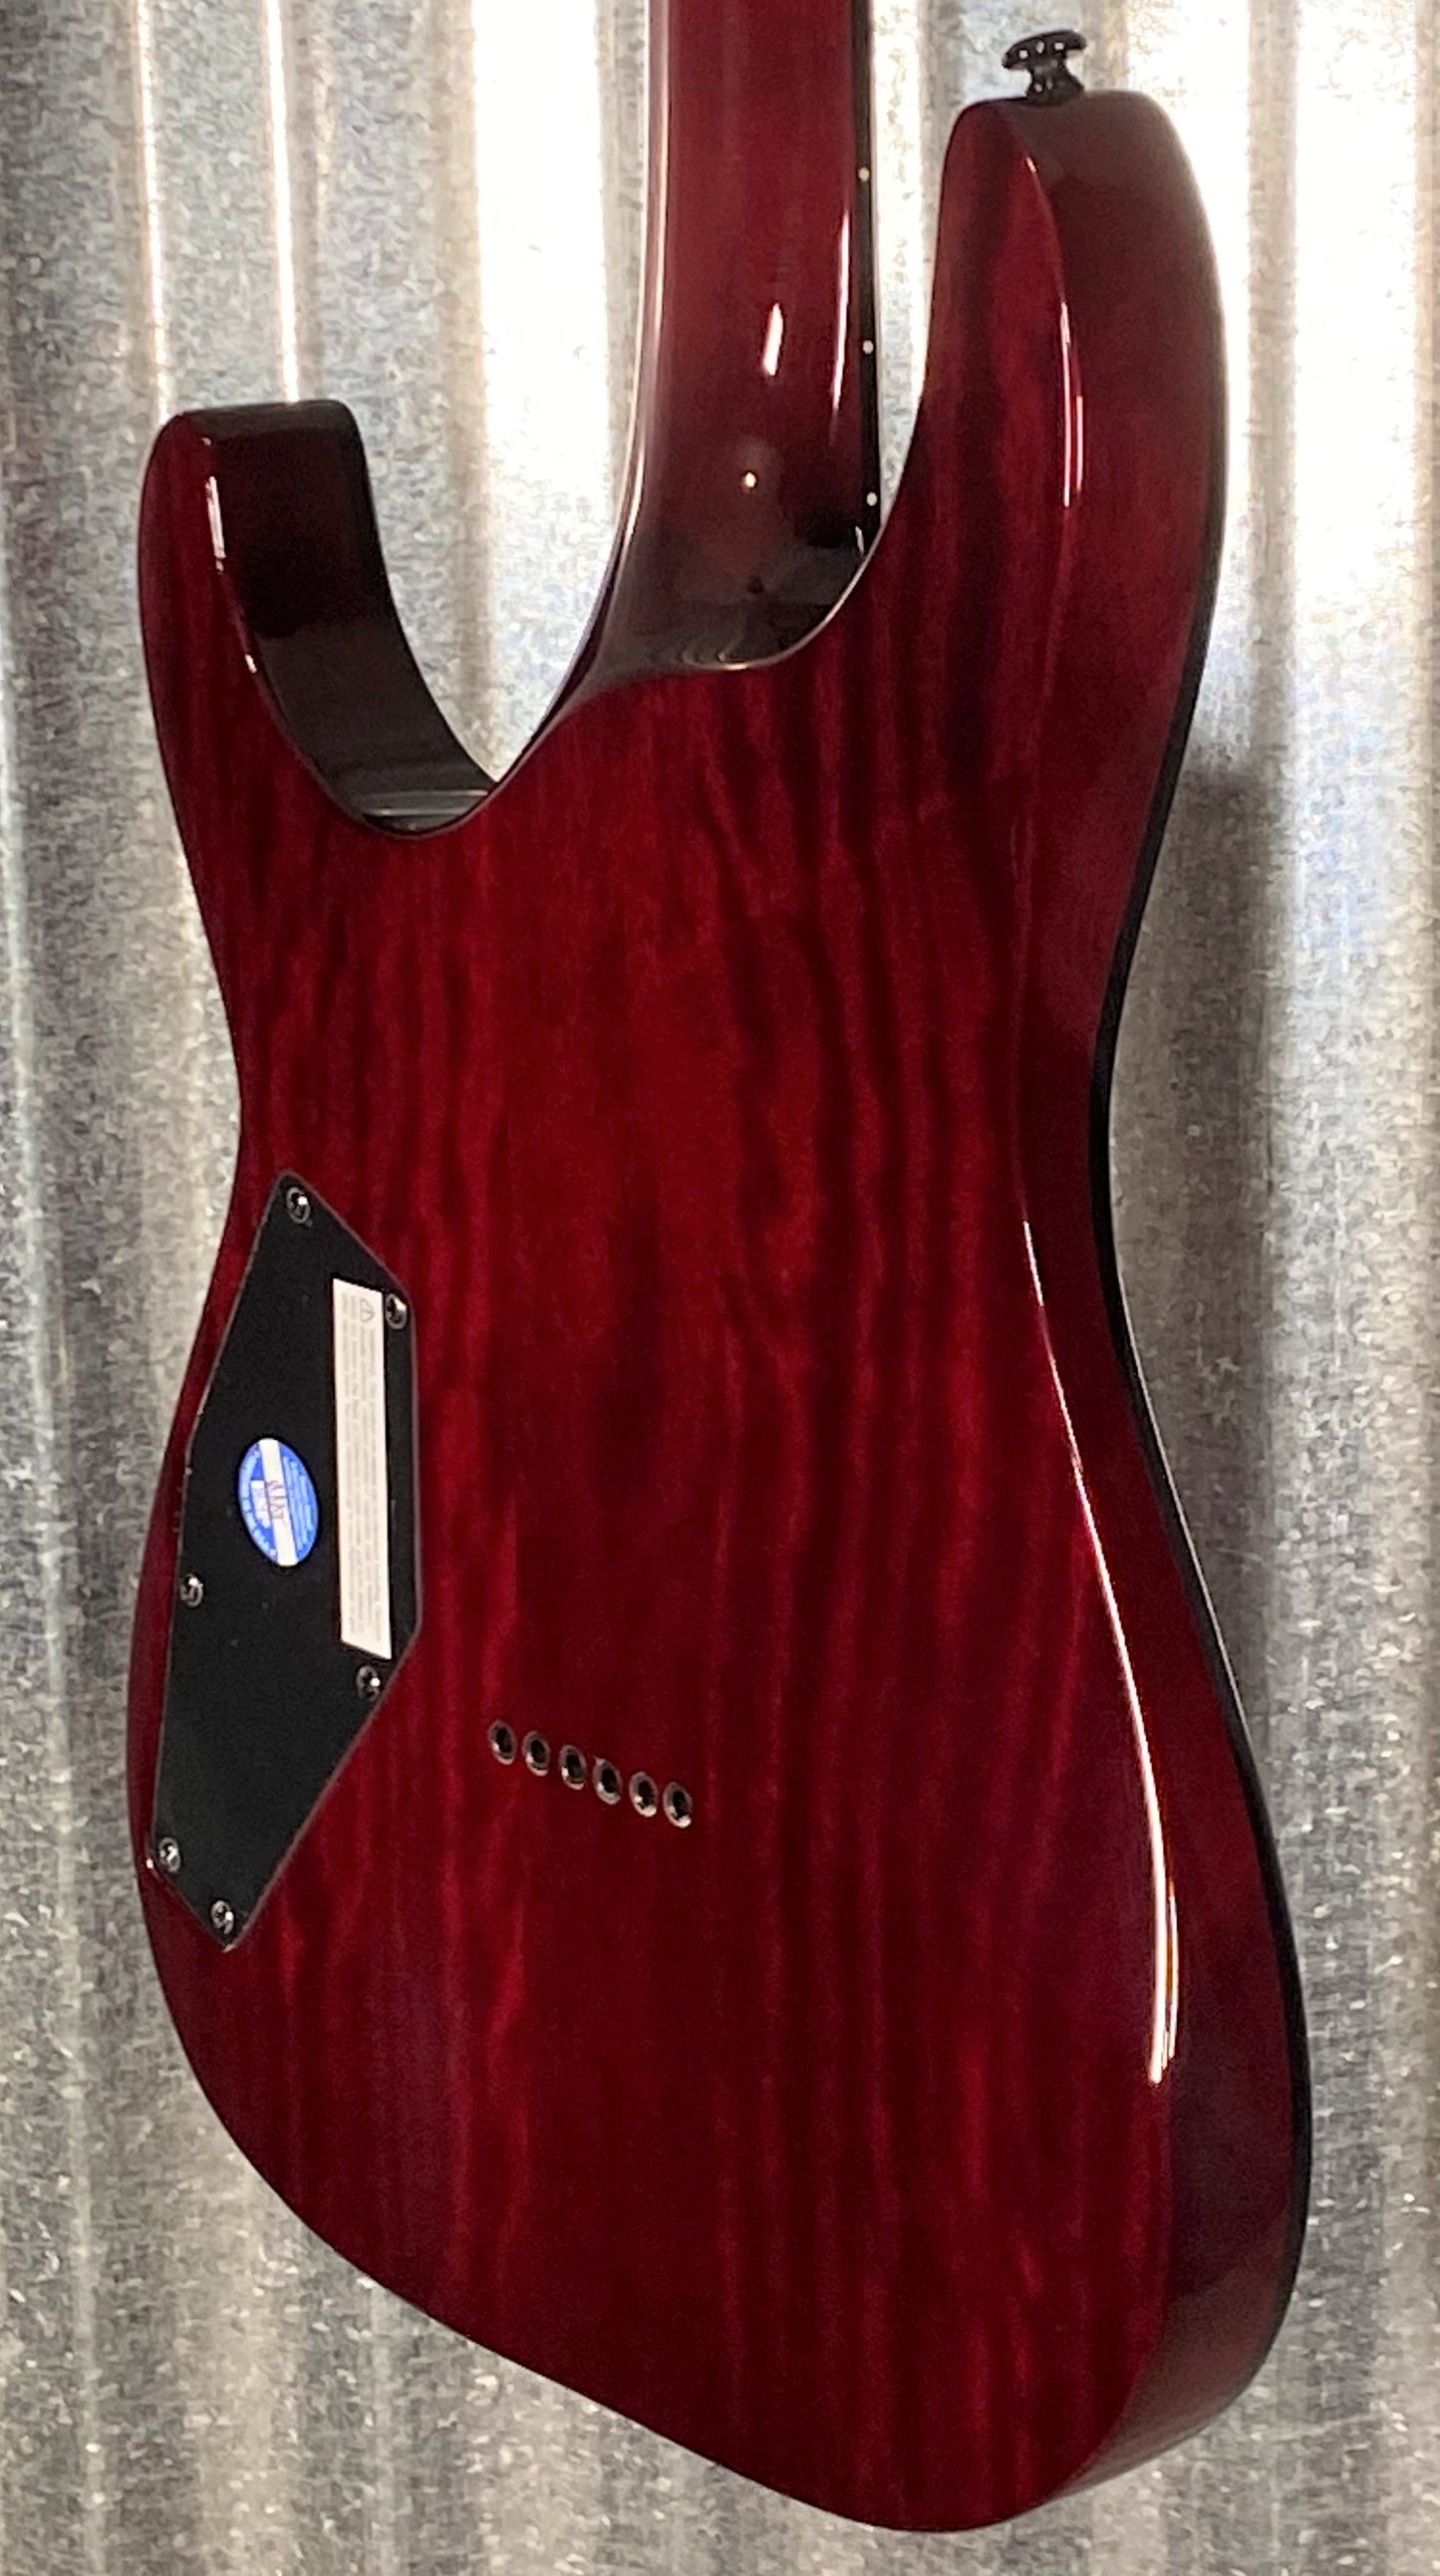 ESP LTD H-1001 See Thru Black Cherry Seymour Duncan Guitar LH1001WMSTBC #2435